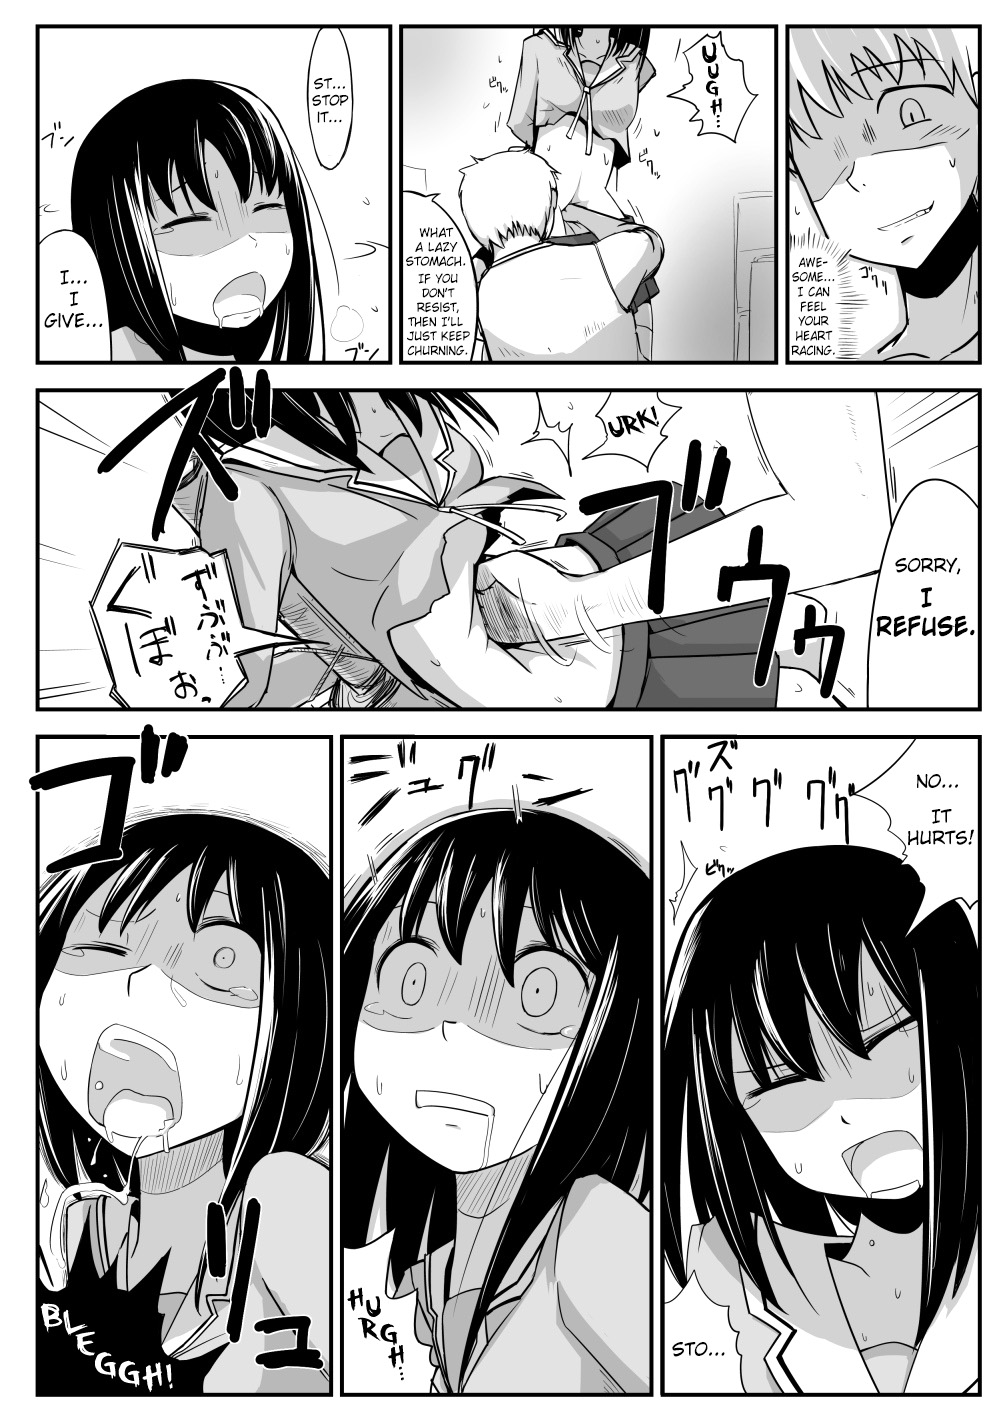 [nnS] Manga About Viciously Beating Osaka’s Stomach (English) =LWB= 